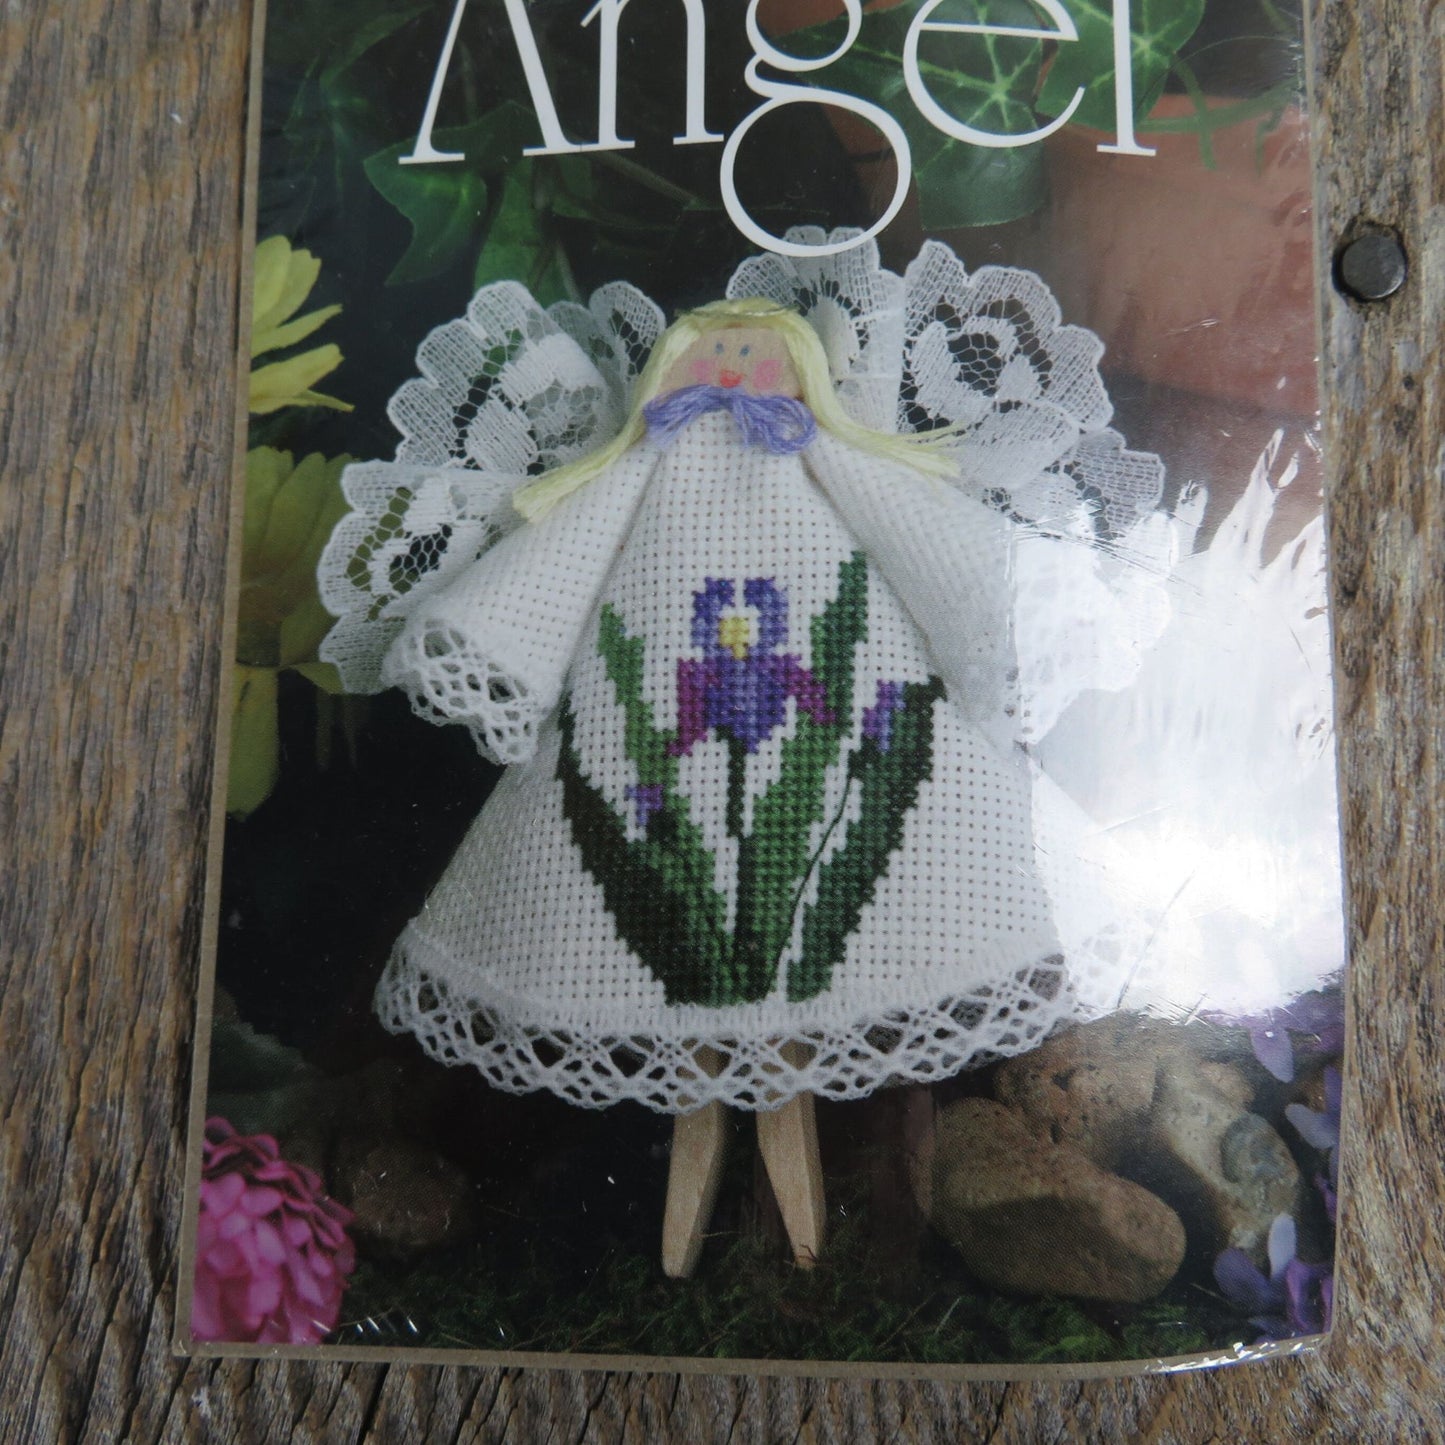 Vintage Counted Cross Stitch Kit Clothespin Angel Ornament DMC Iris 2214